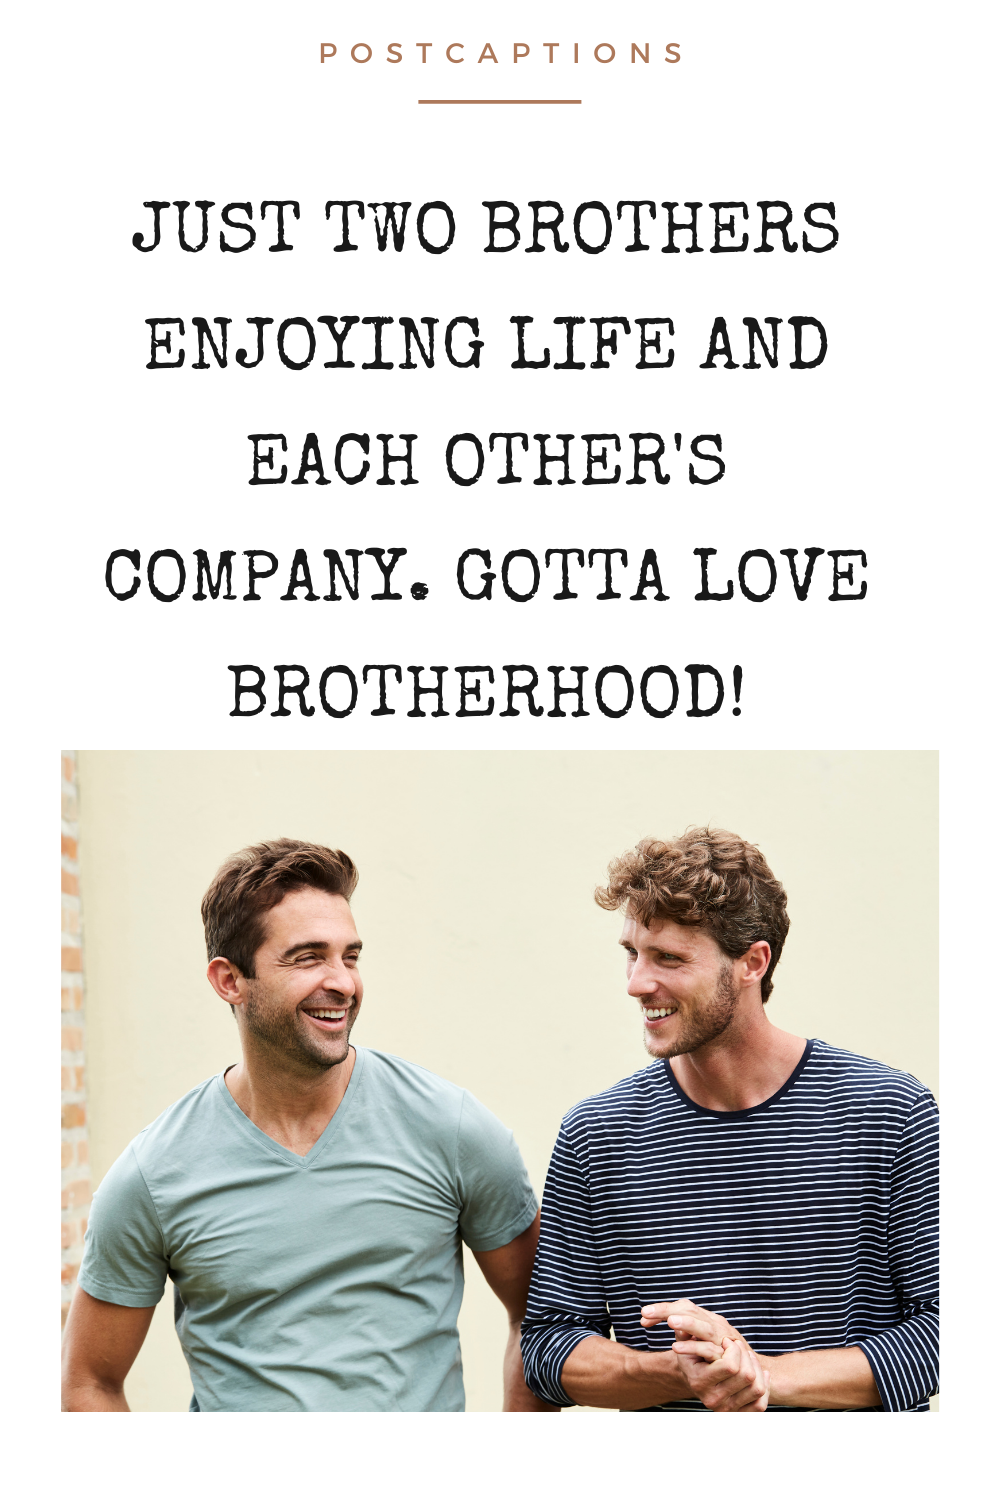 Brotherhood Instagram captions